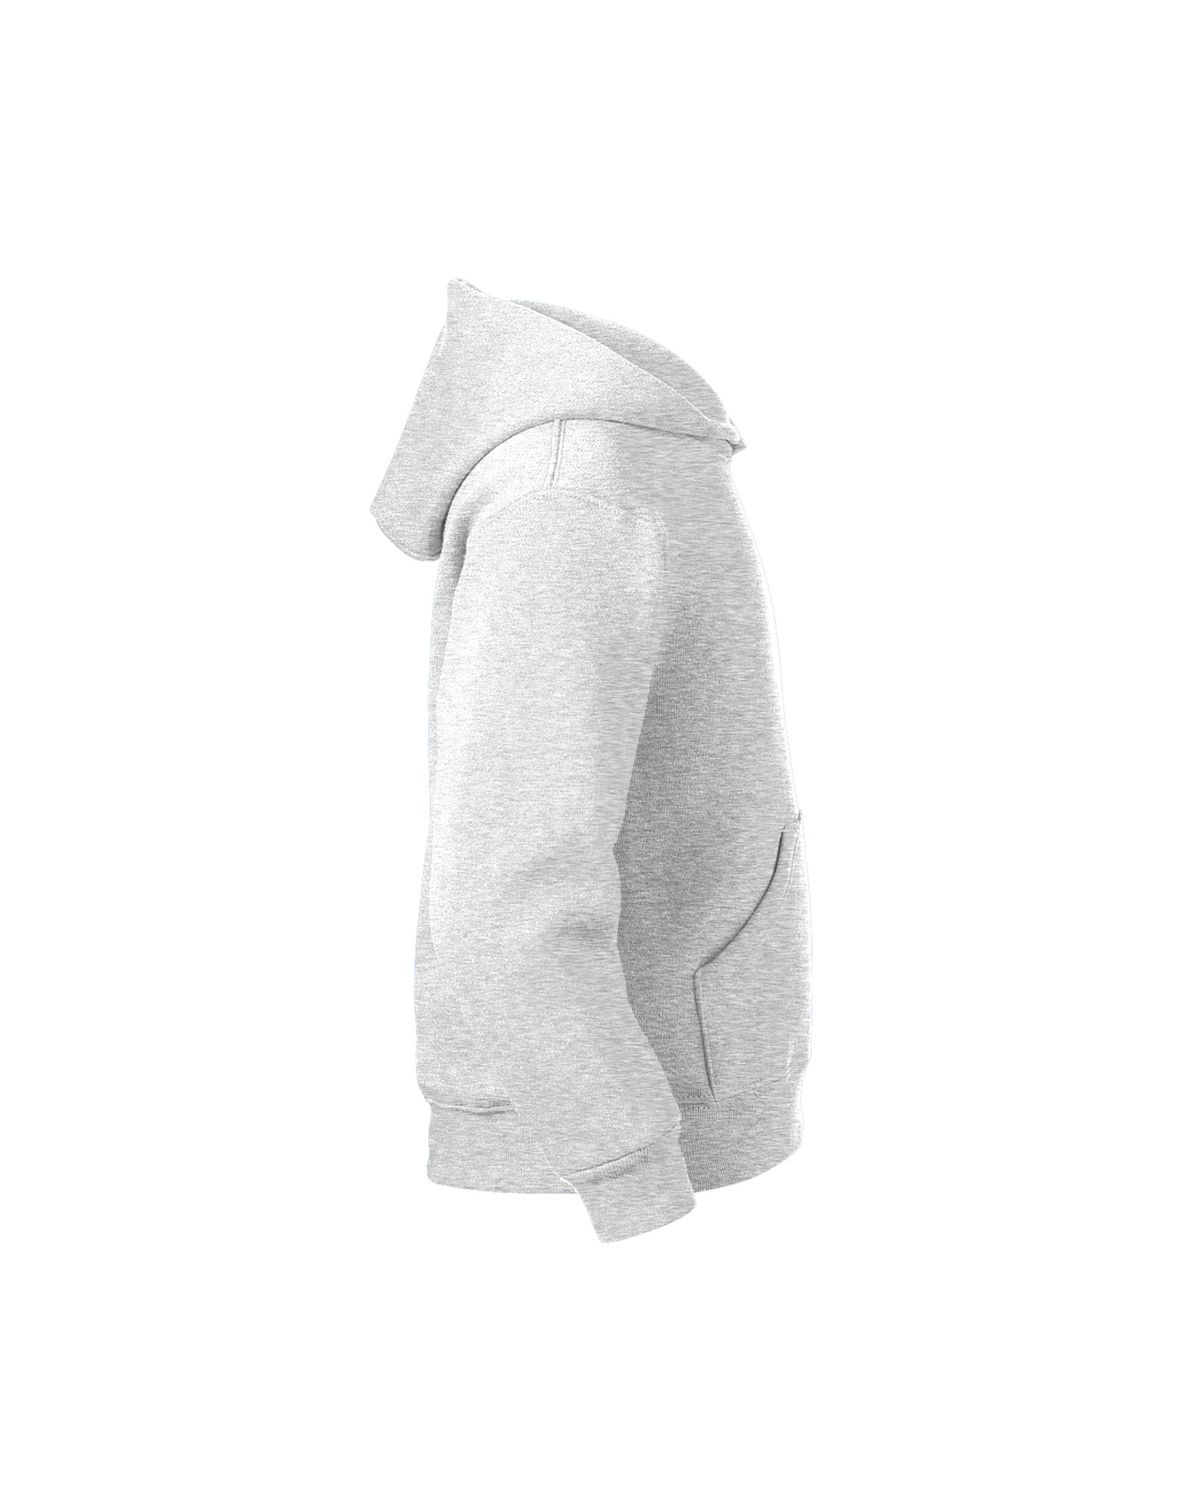 'Soffe J9289 Juvenile Classic Hooded Sweatshirt'